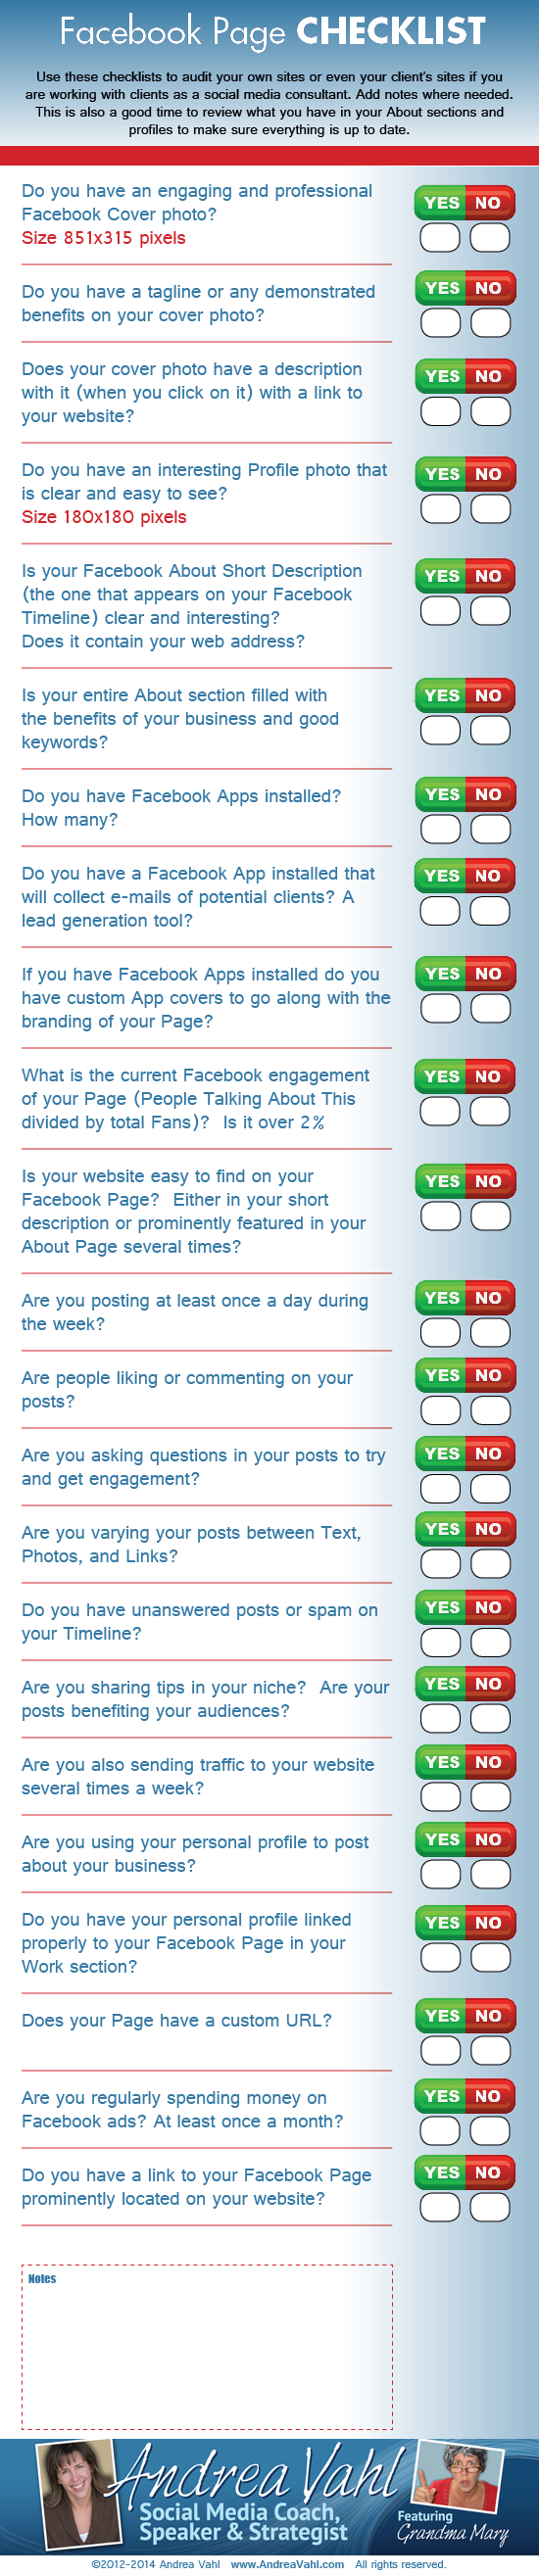 Facebook Checklist For #SocialMedia Marketers #infographic